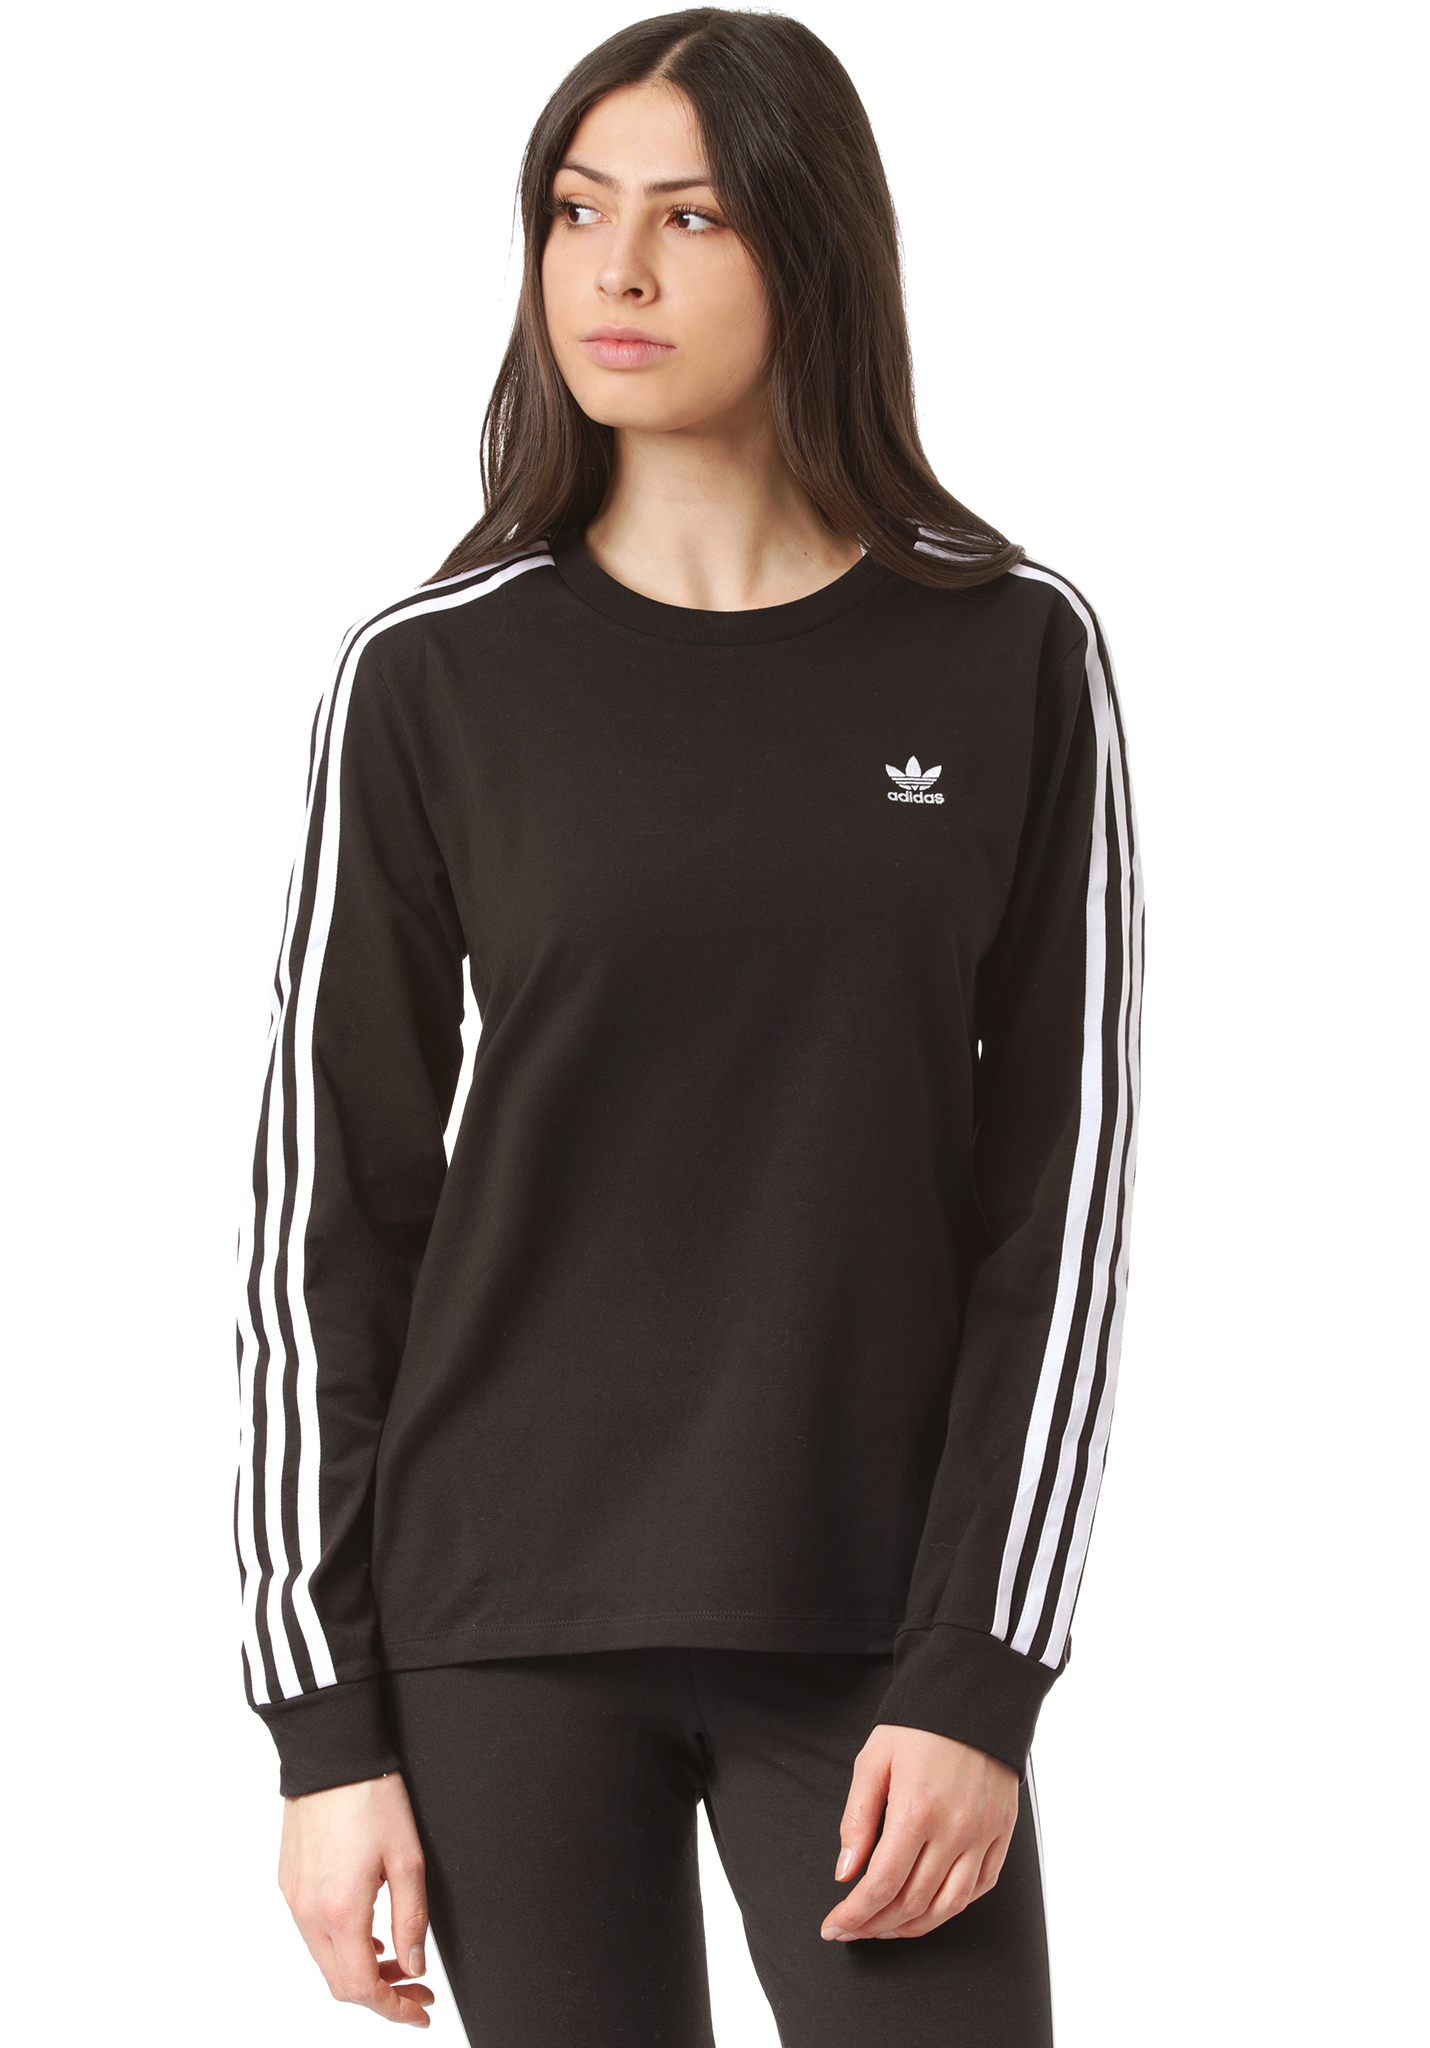 Adidas Originals 3 Stripes Sweatshirts black 36